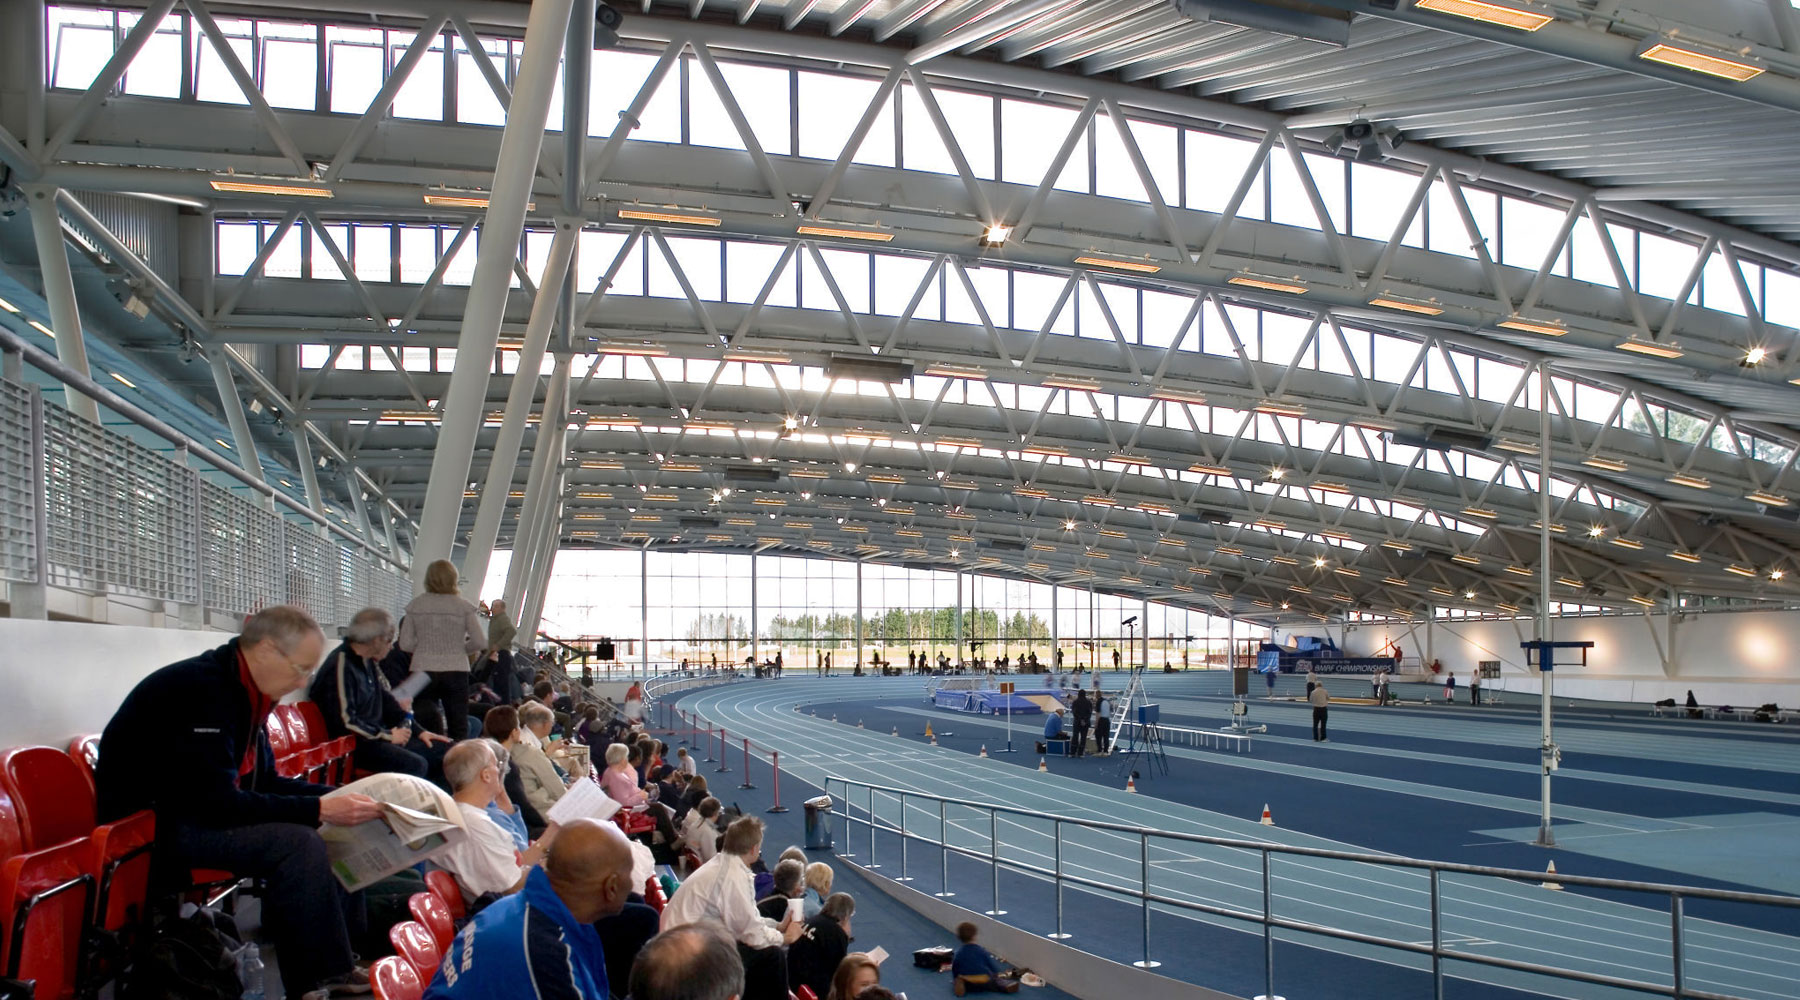 Lee Valley Athletics Centre | Wrenbridge Sport